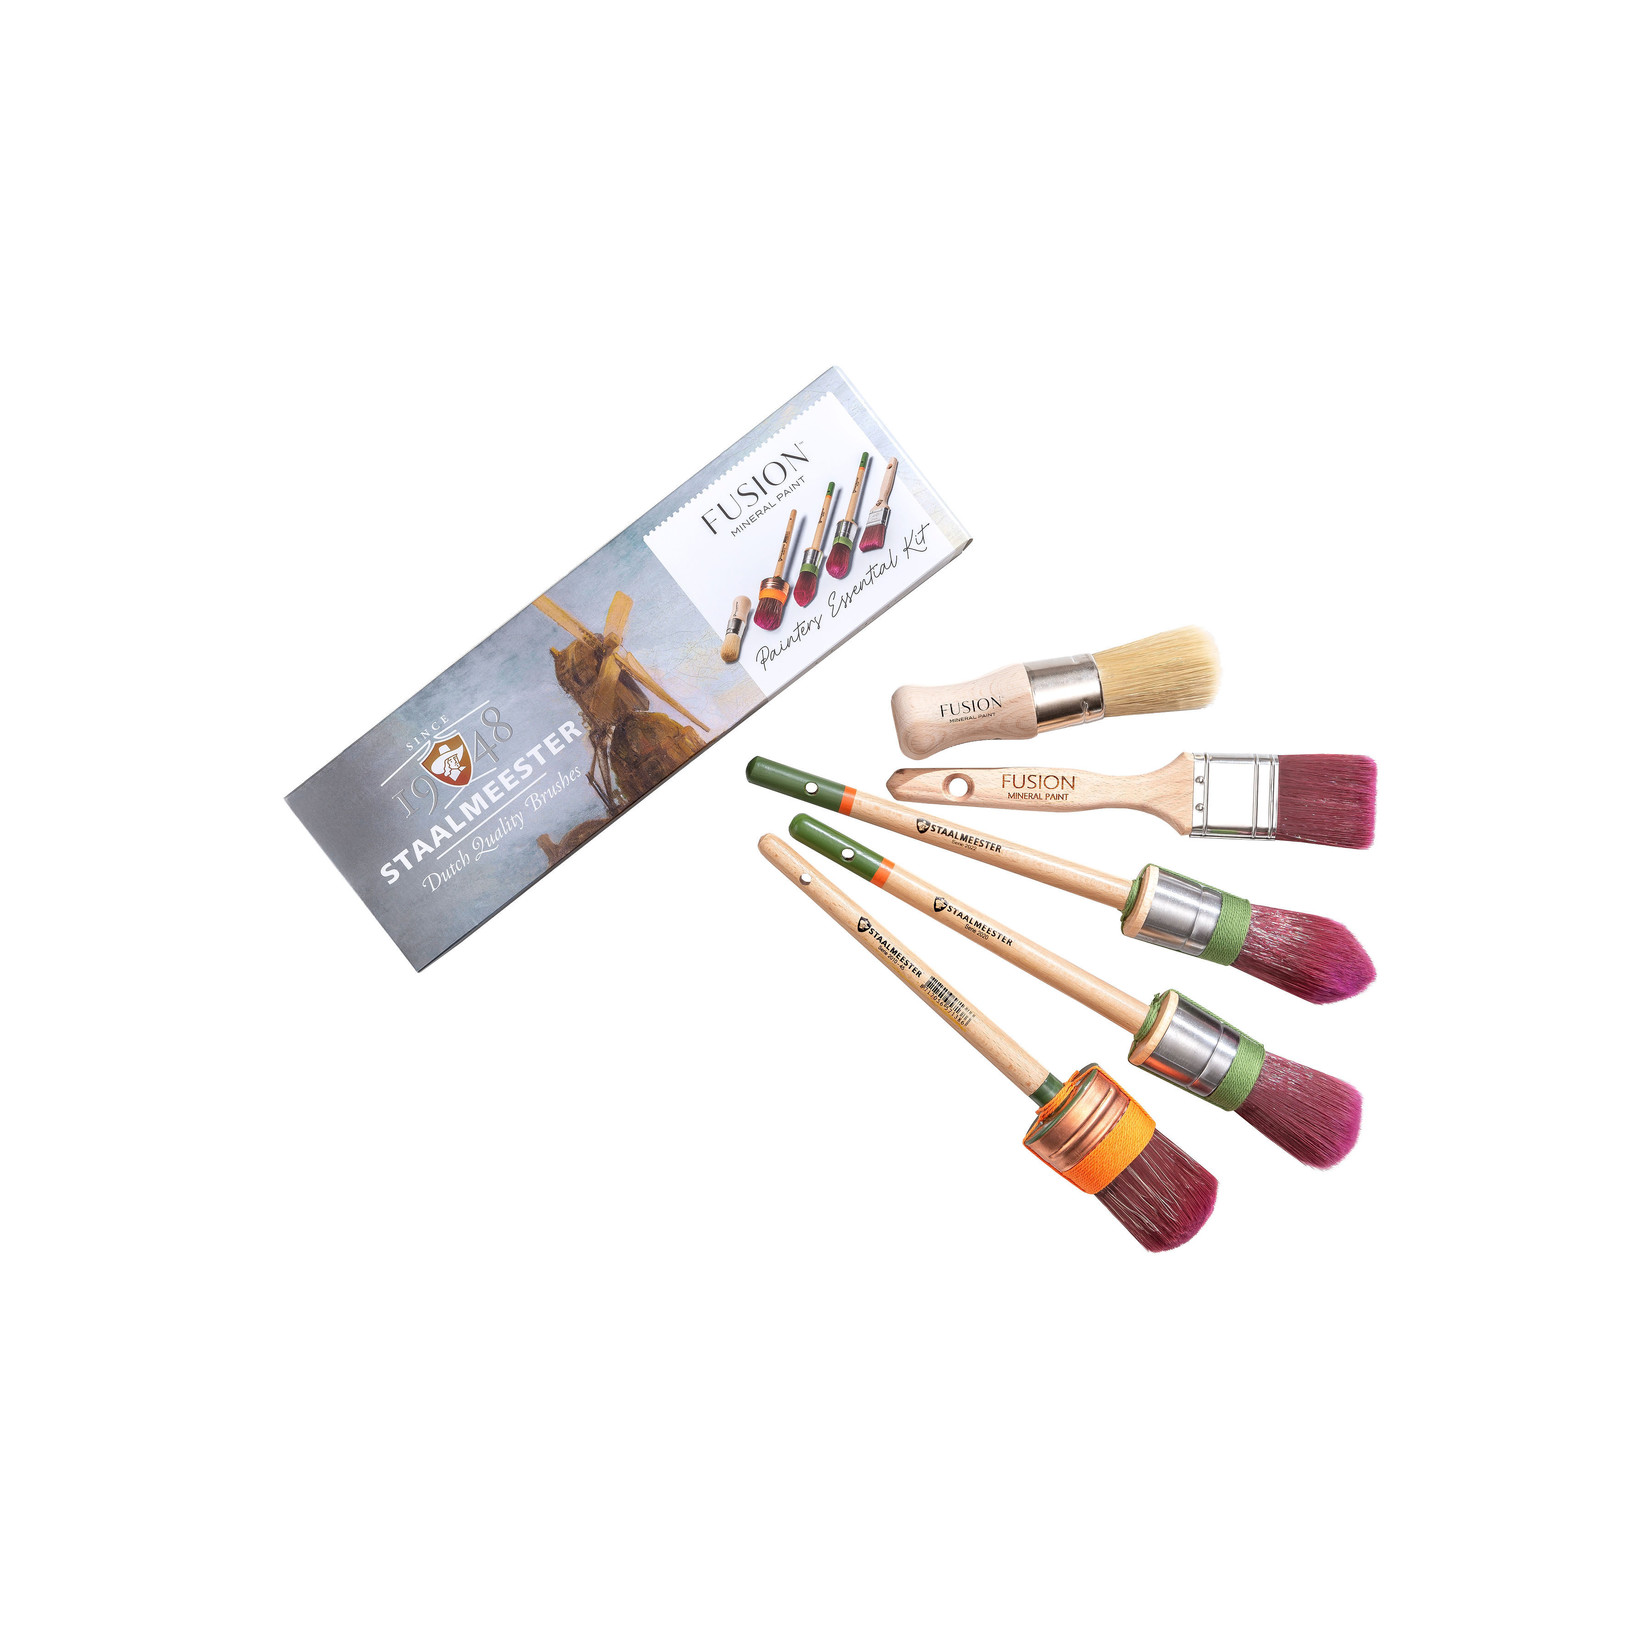 Staalmeester® - Painters Essential Kit (5 brushes)